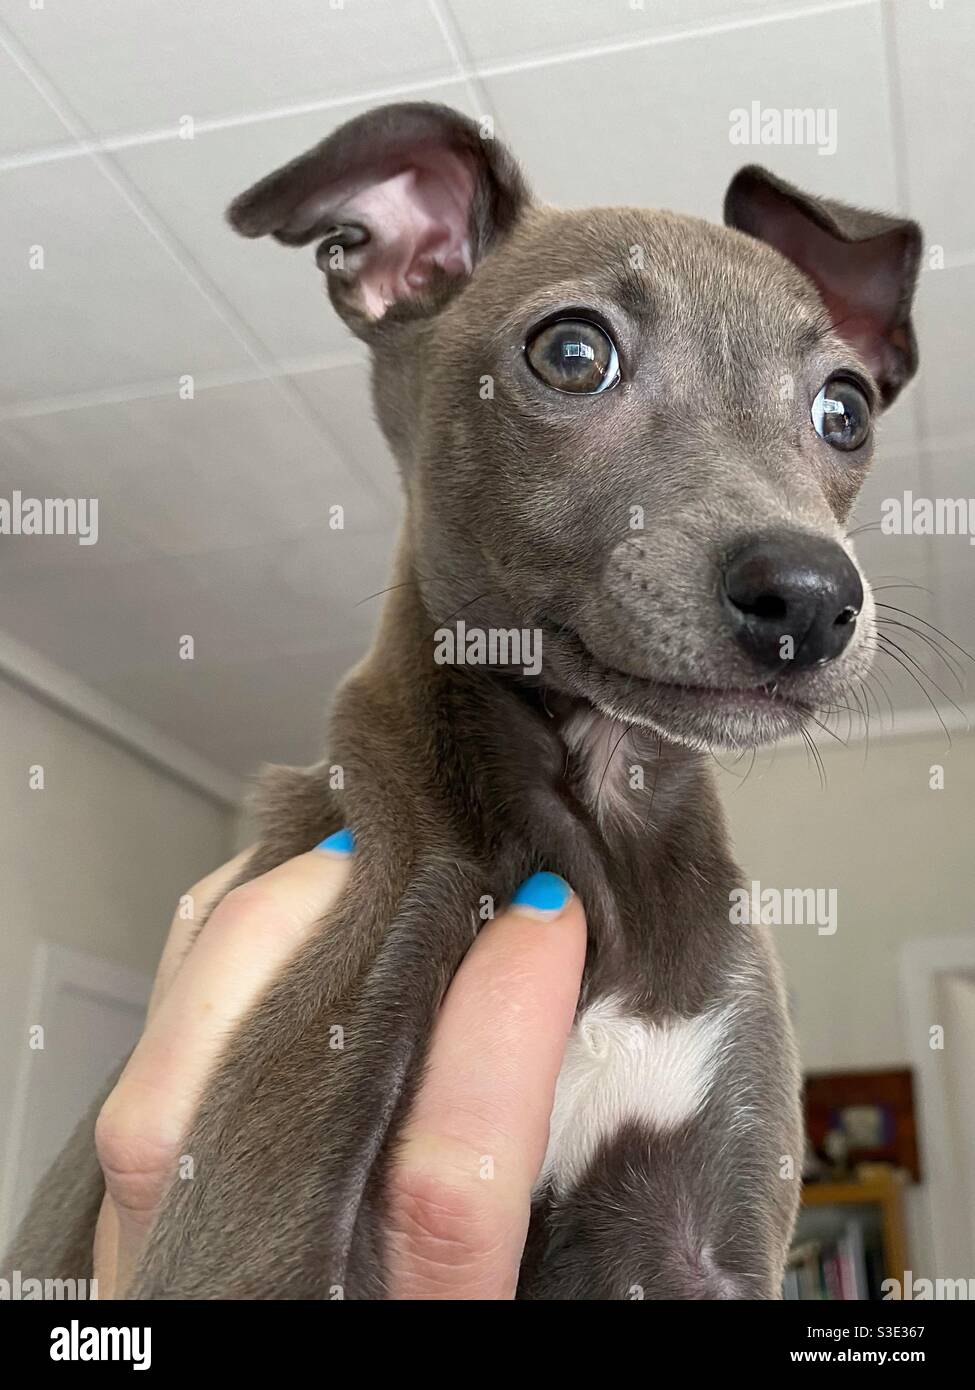 Holding an Alert puppy iggy Stock Photo